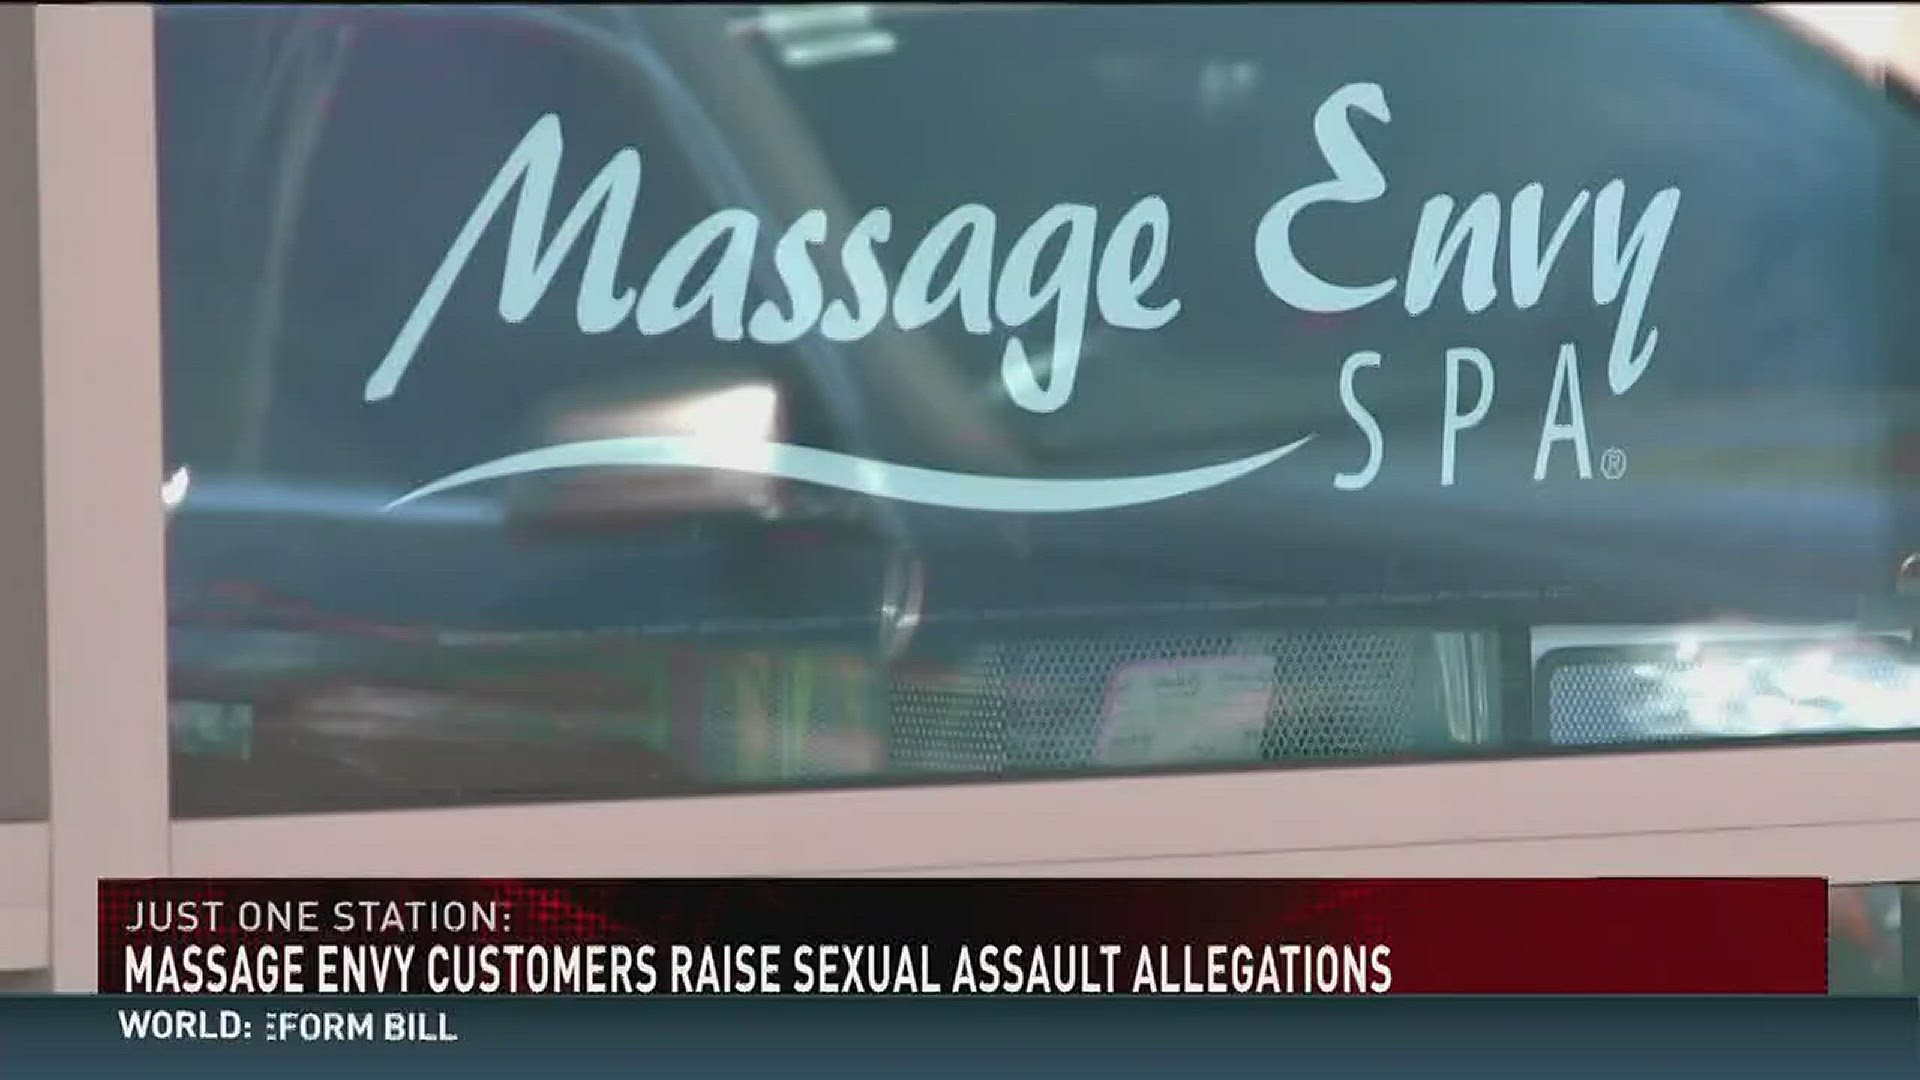 New report details disturbing sexual assault claims against Massage Envy 12news pic